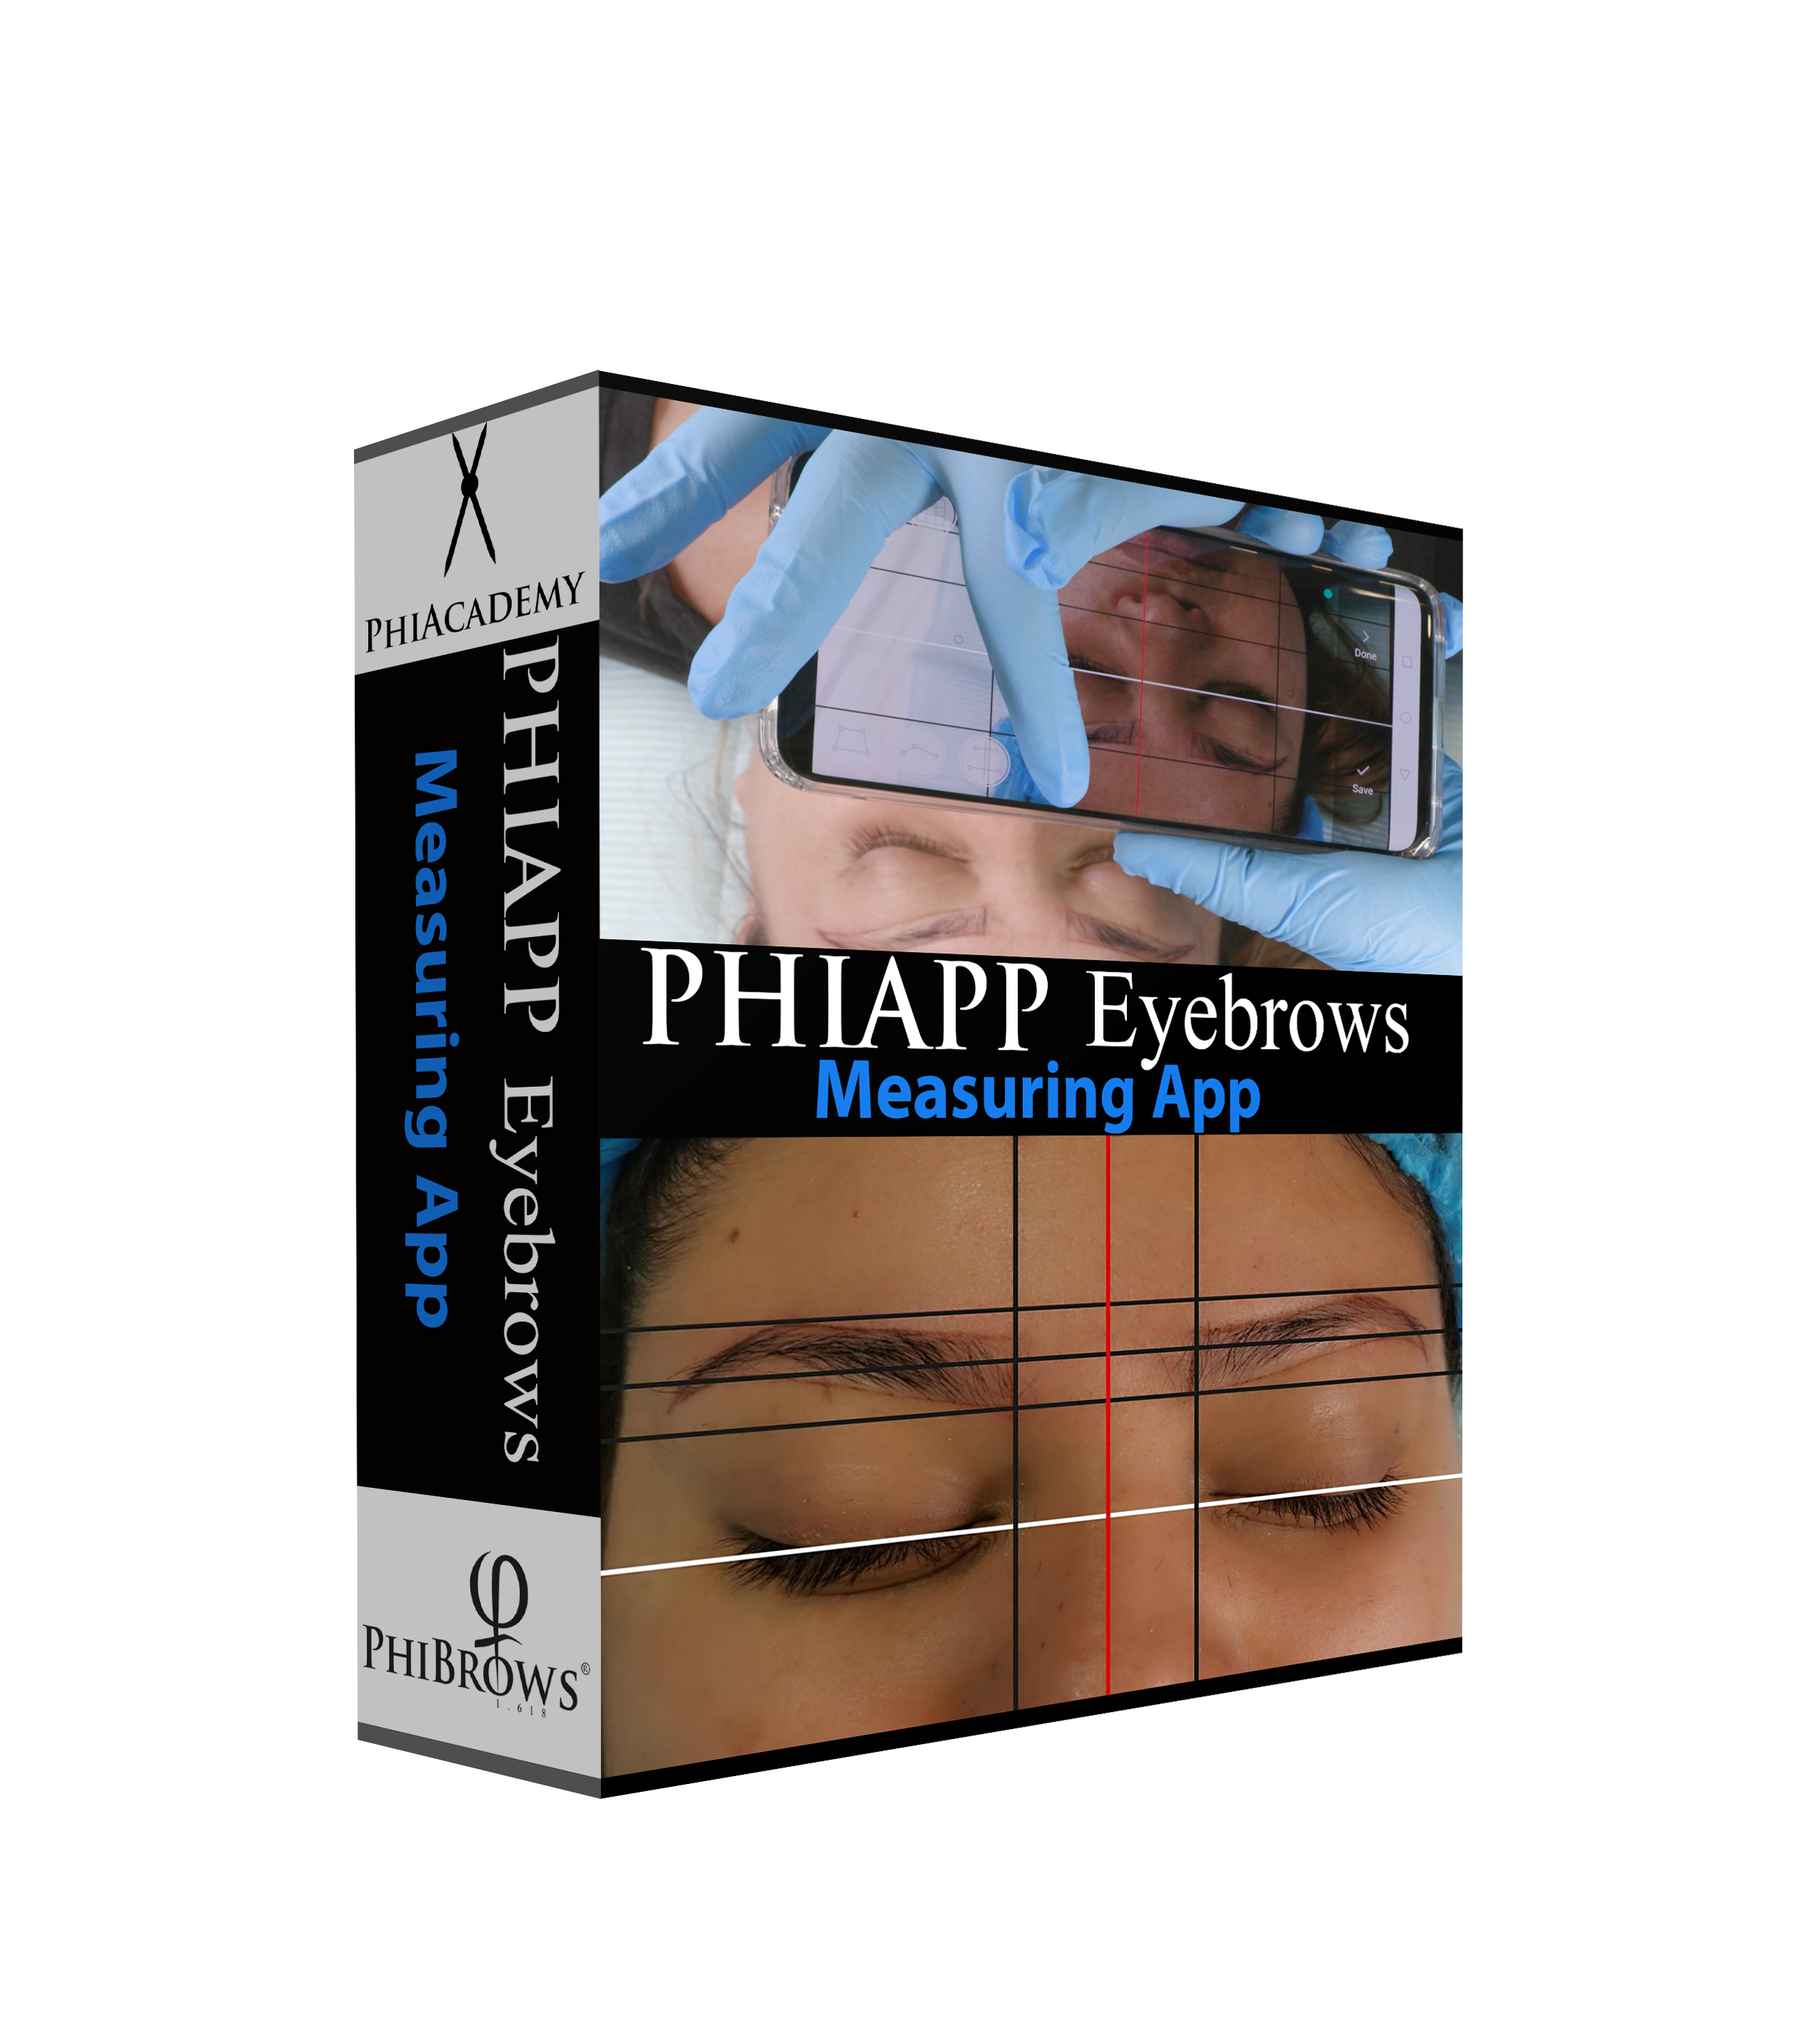 PHIAPP Eyebrows measuring app